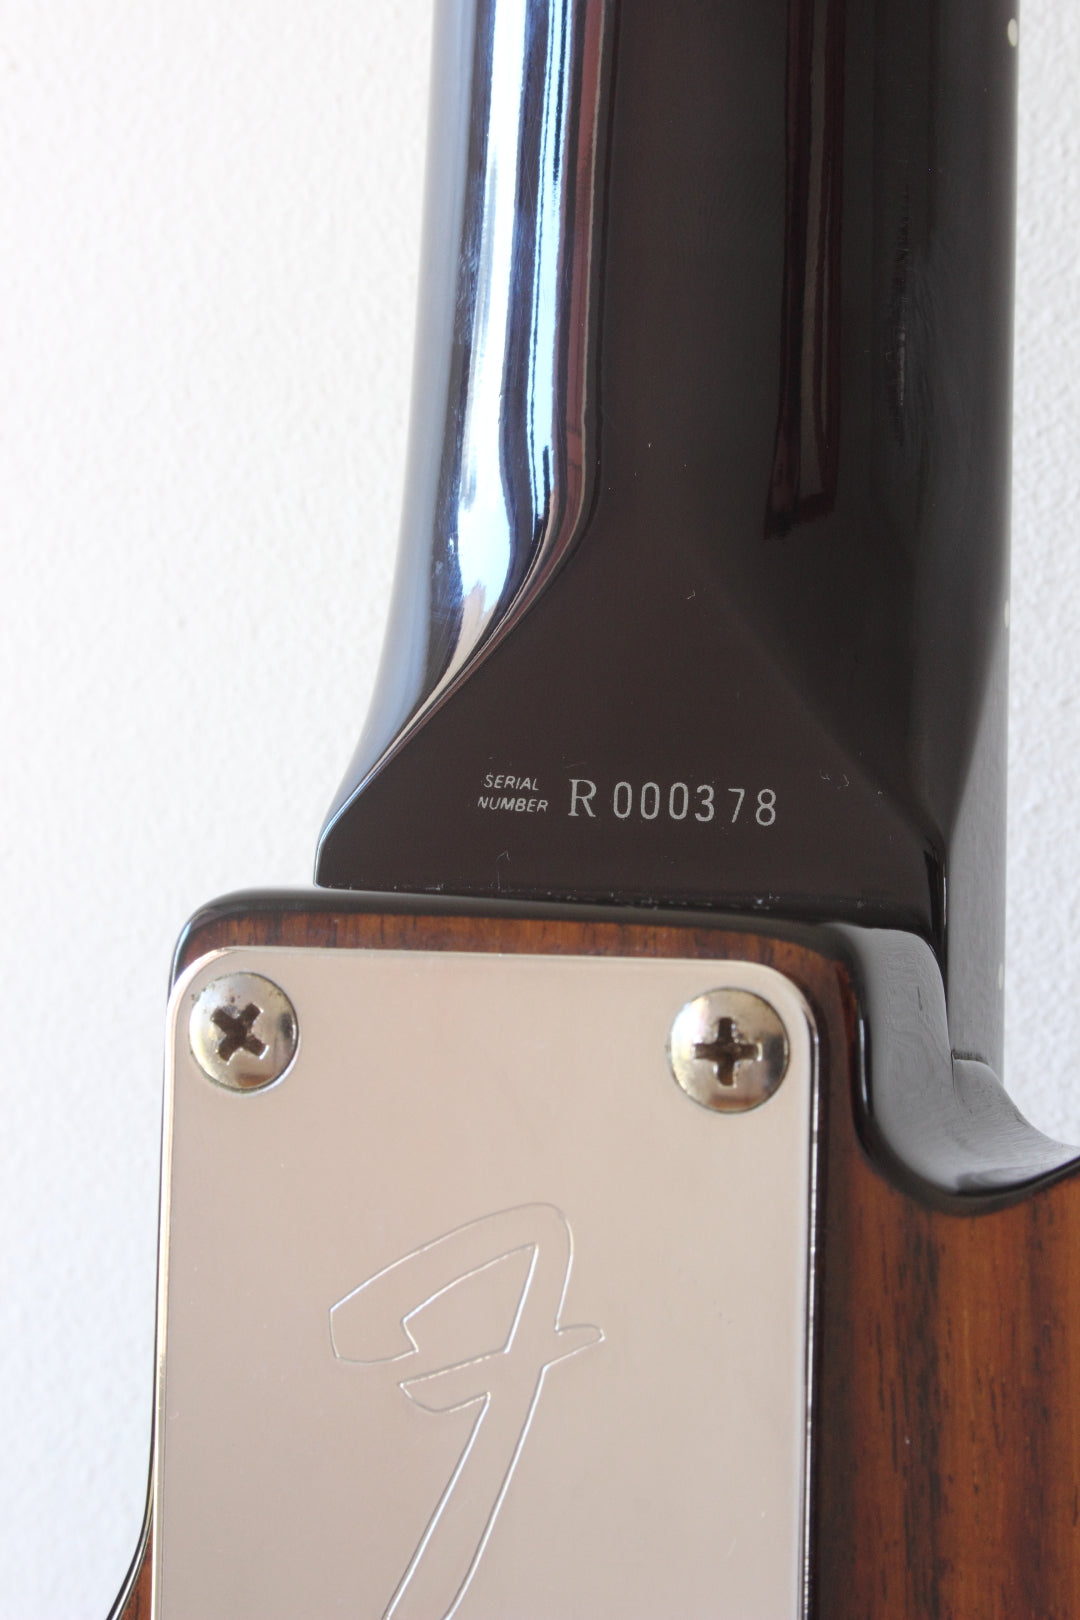 Fender Japan '69 Reissue Rosewood Telecaster TL-ROSE 2004-5